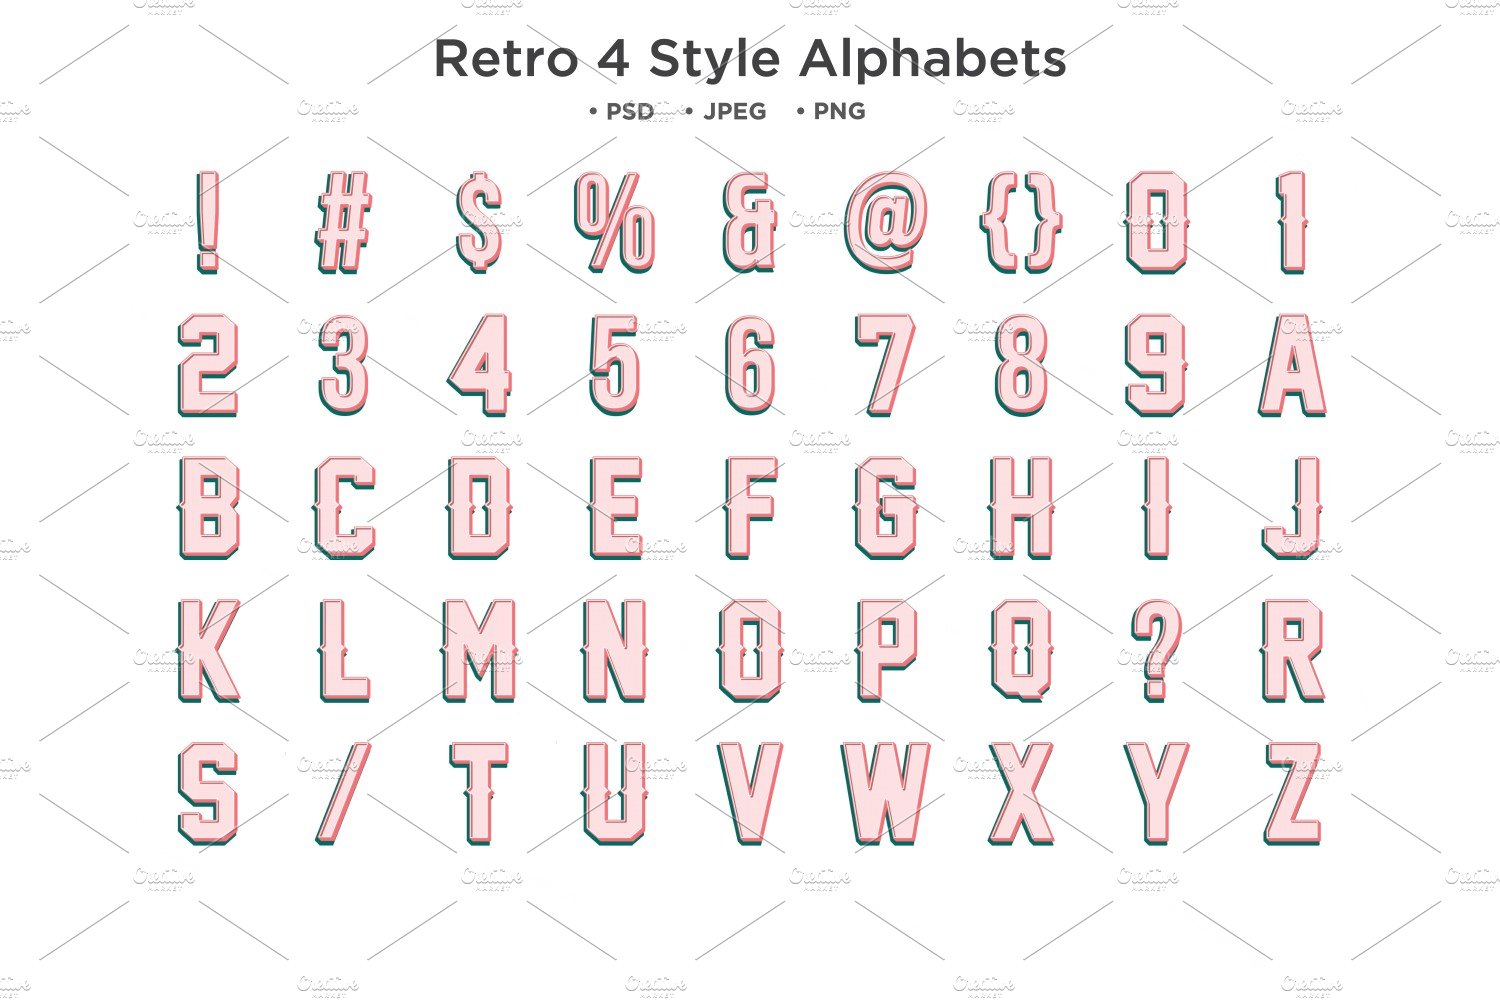 Retro 4 Style Alphabet Typographycover image.